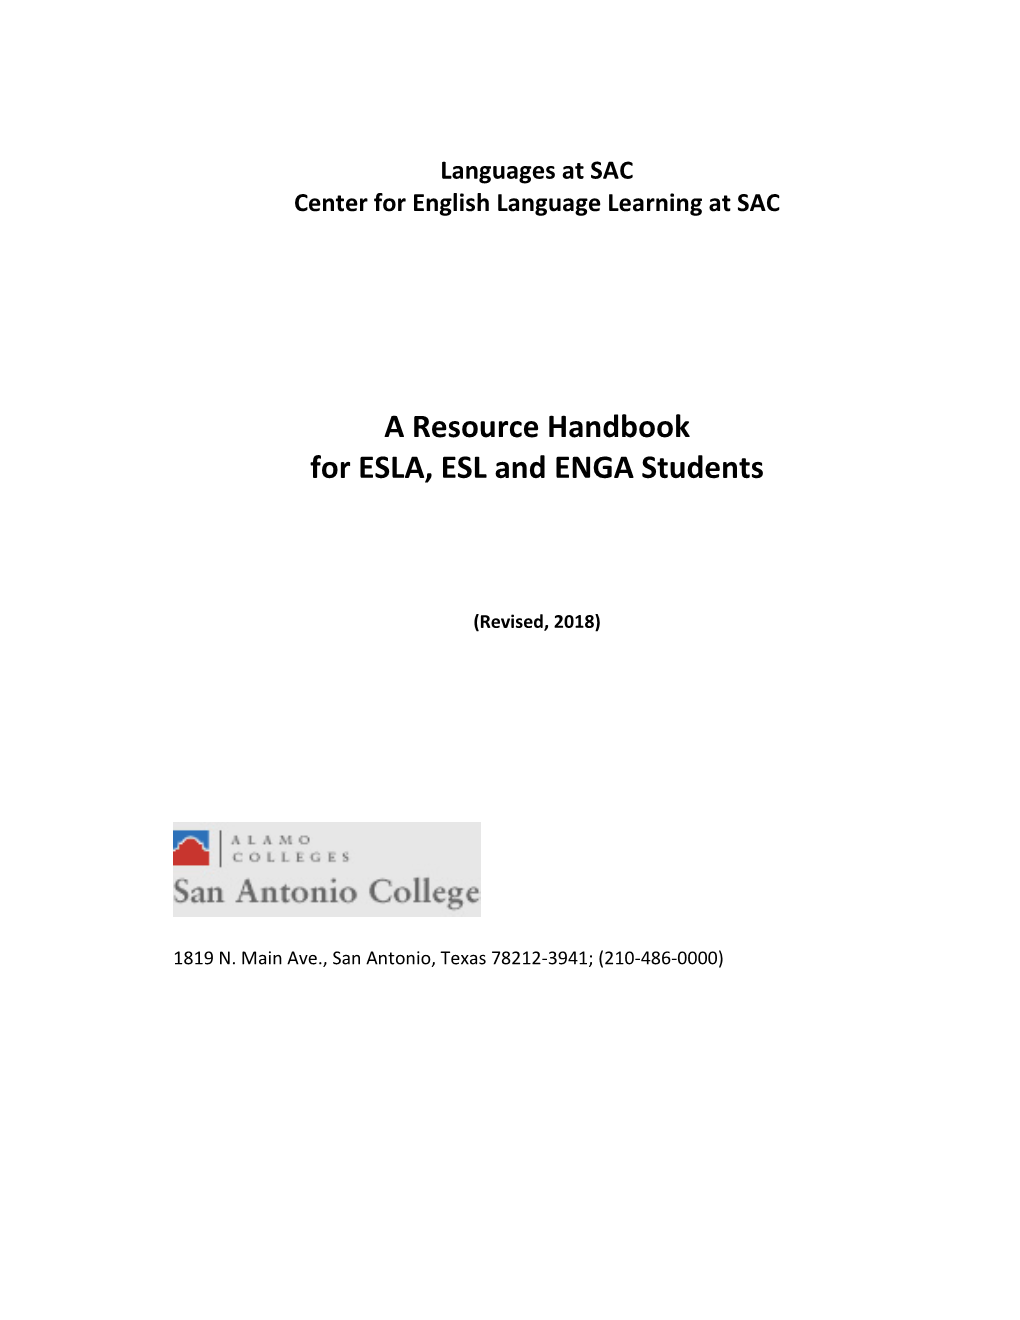 A Resource Handbook for ESLA, ESL and ENGA Students